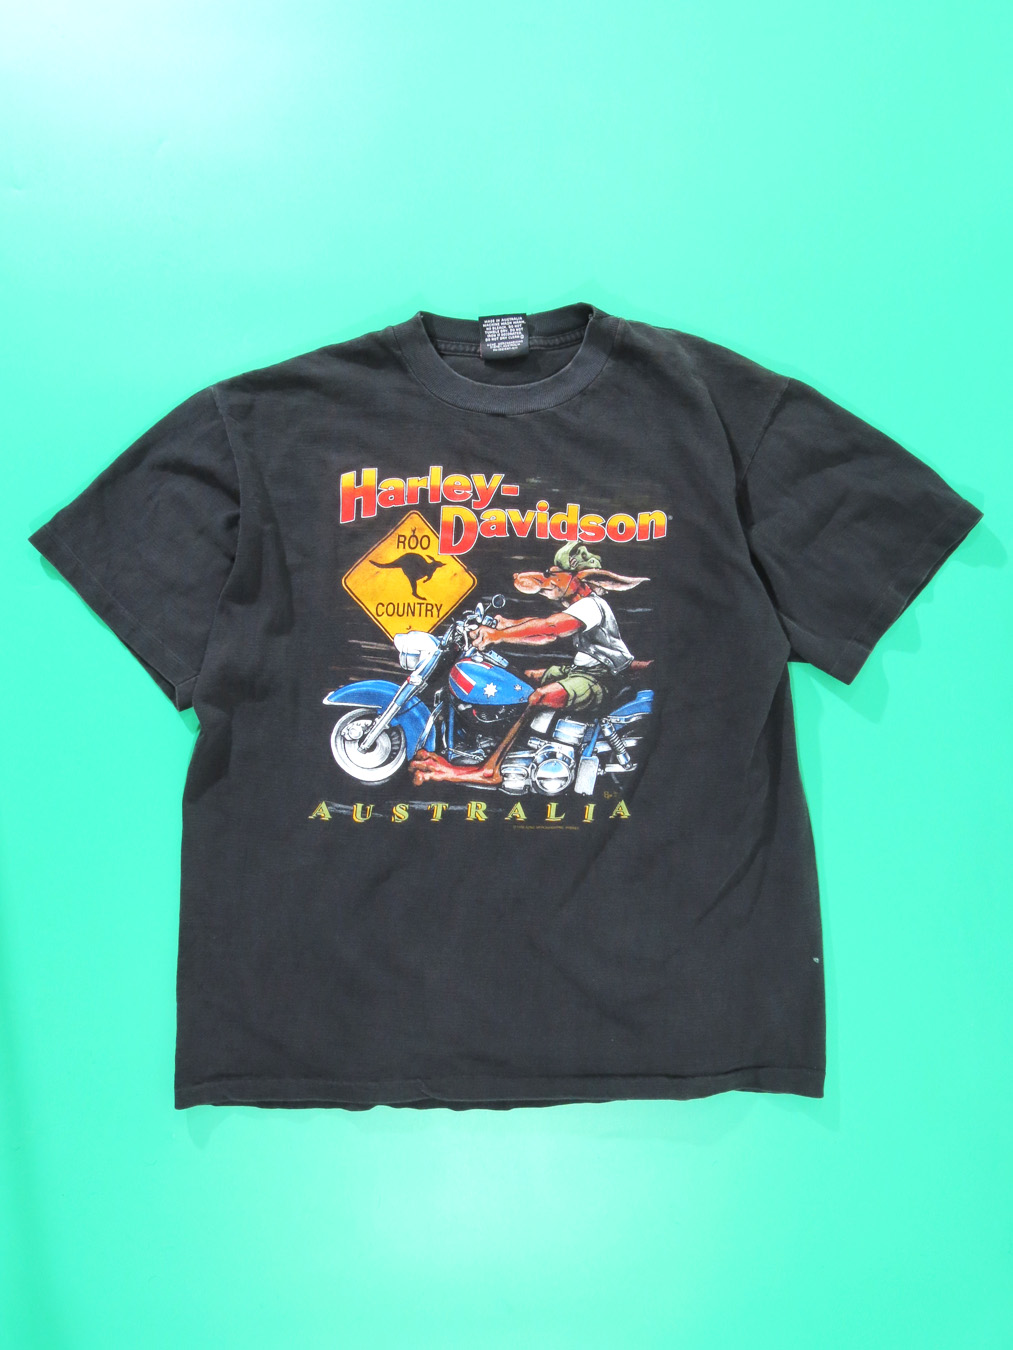 Buy Vintage Harley Davidson Shirt Australia Cheap Online